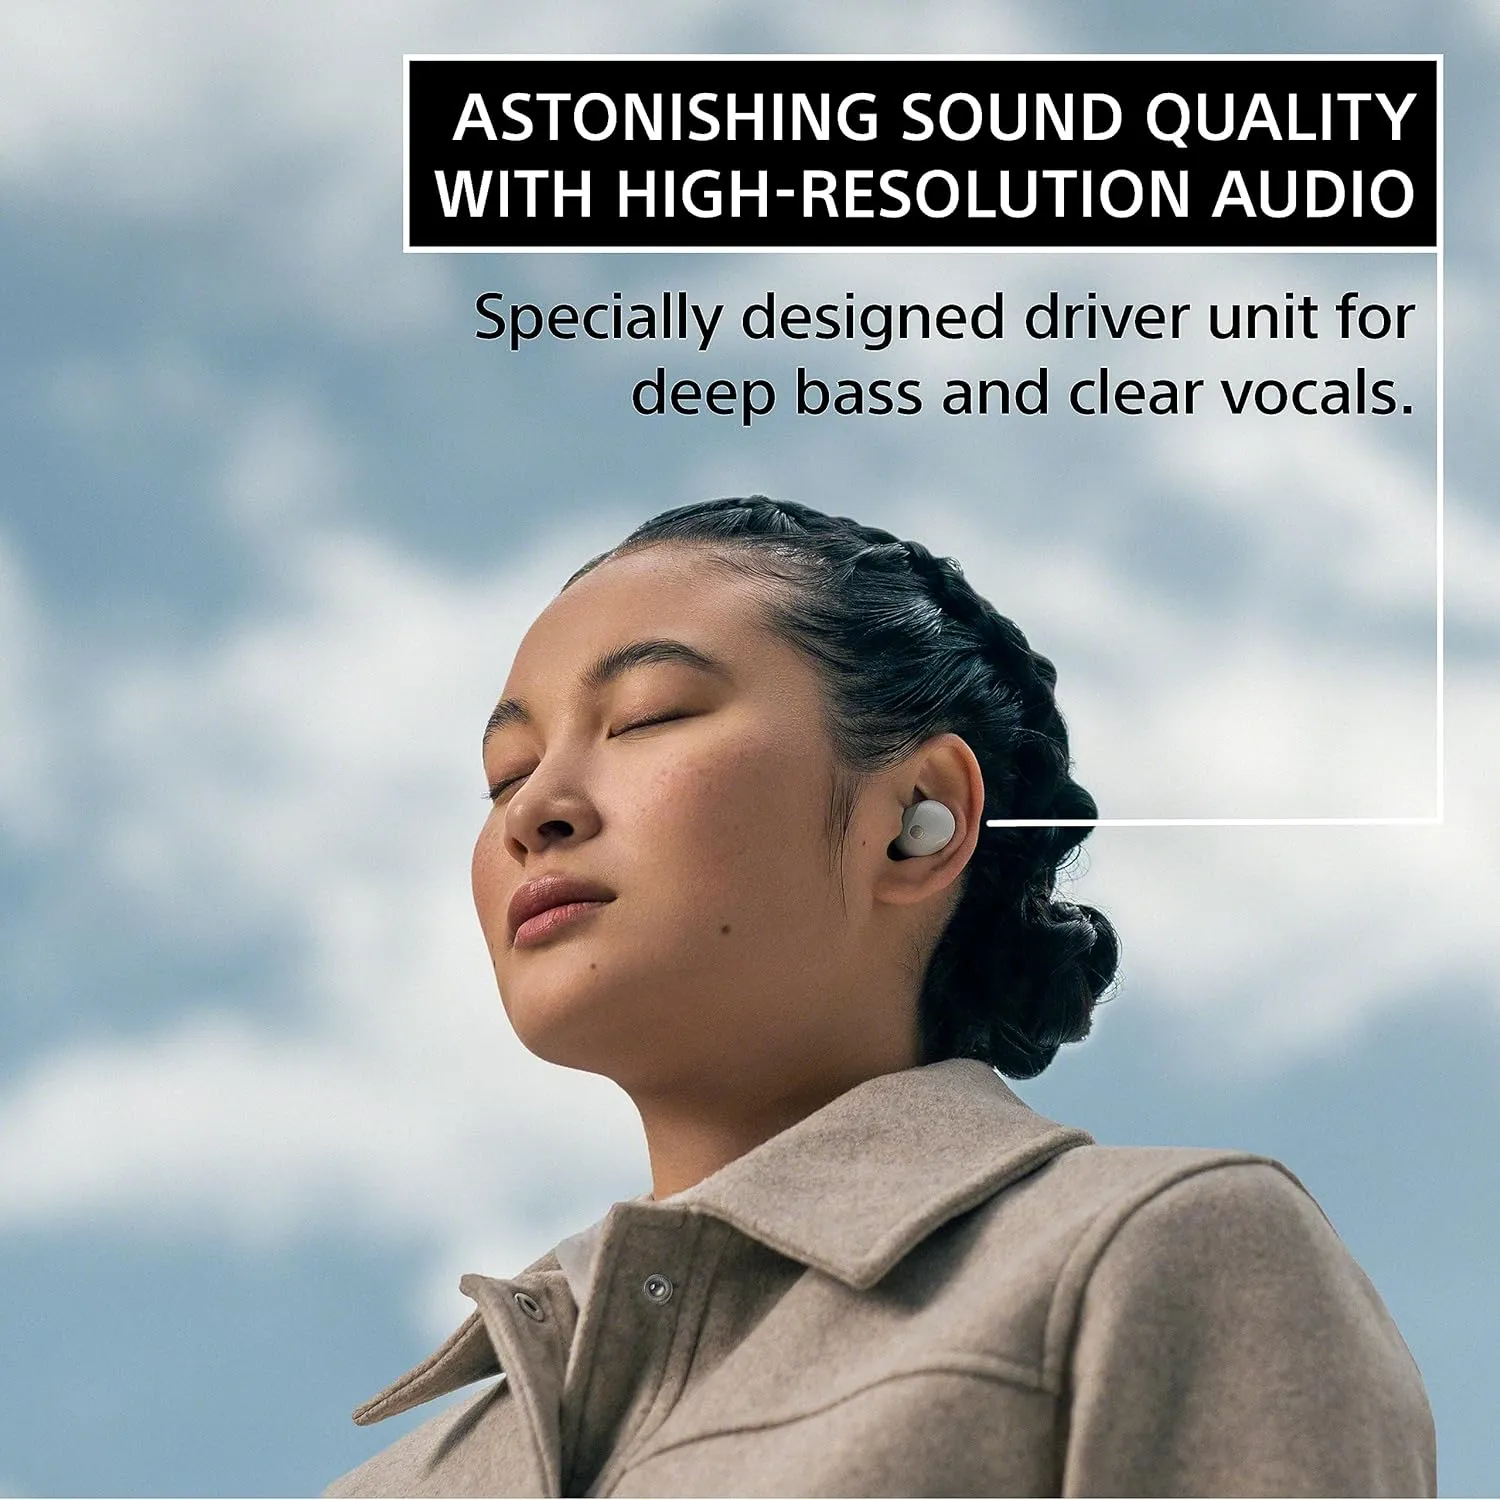 Sony WF-1000XM5 Truly Wireless Noise Canceling Earbuds